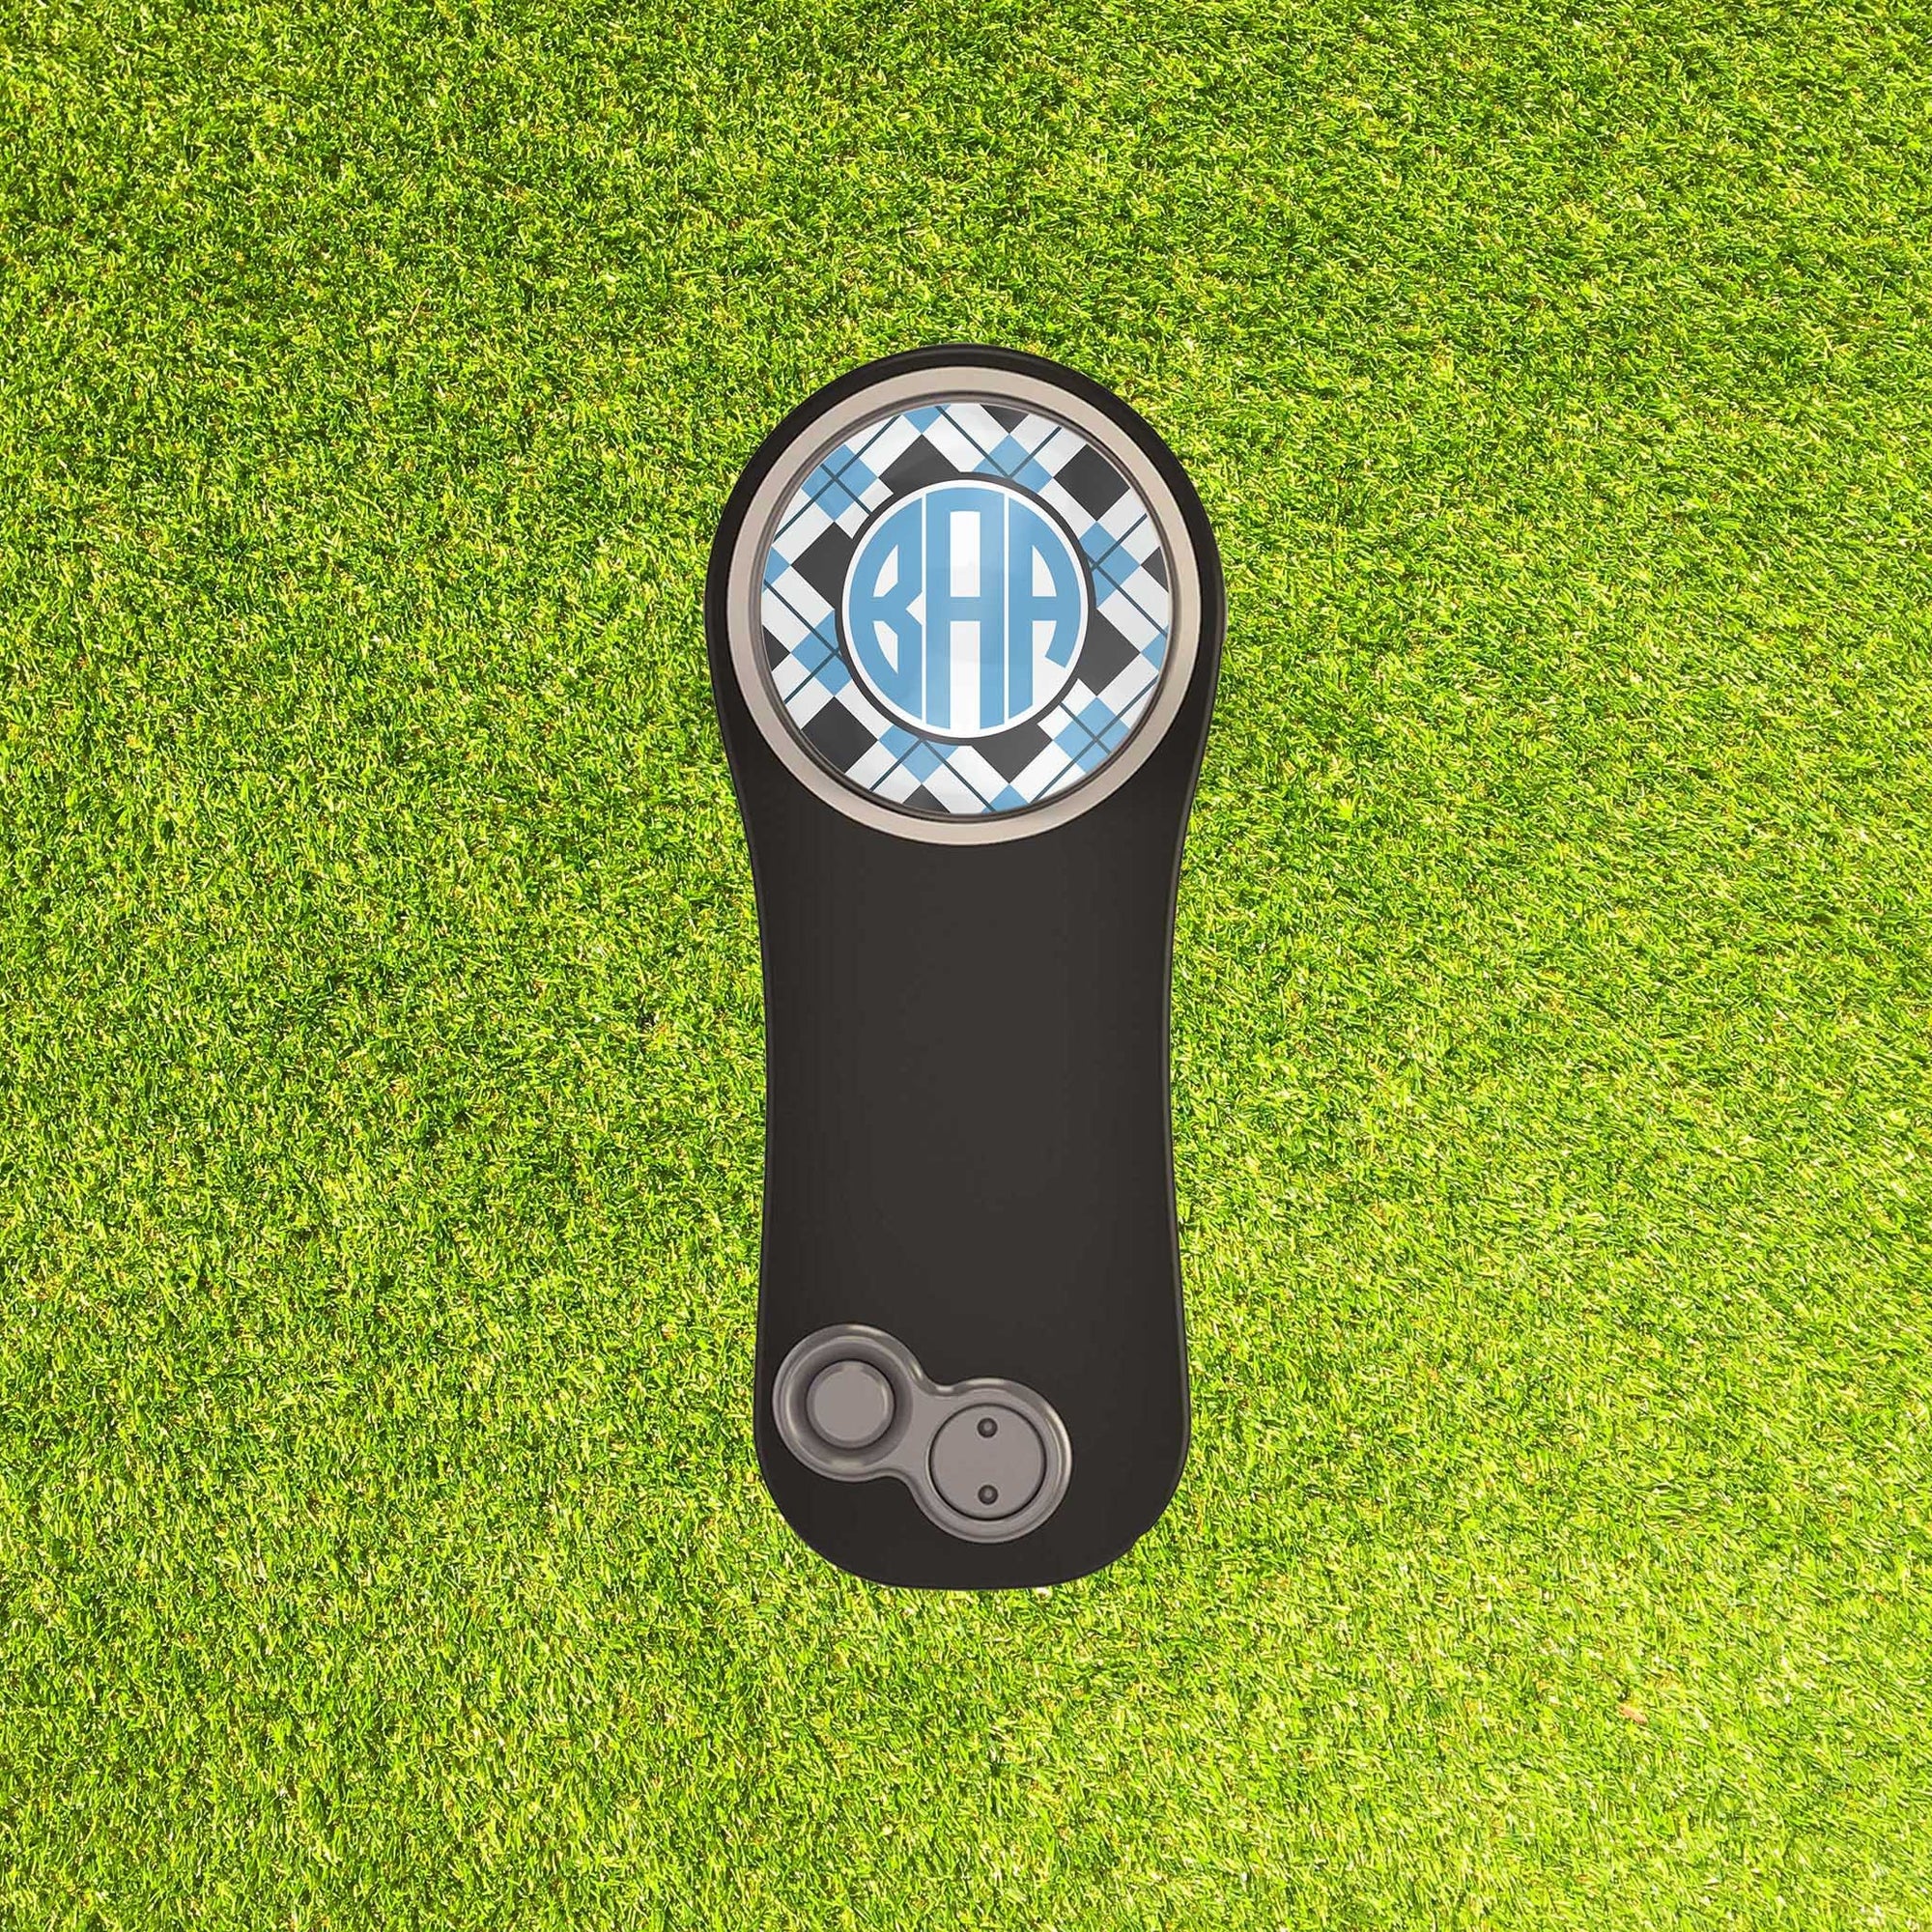 Personalized PitchFix Divot Tool | Golf Accessories | Golf Gifts | Light Blue Argyle